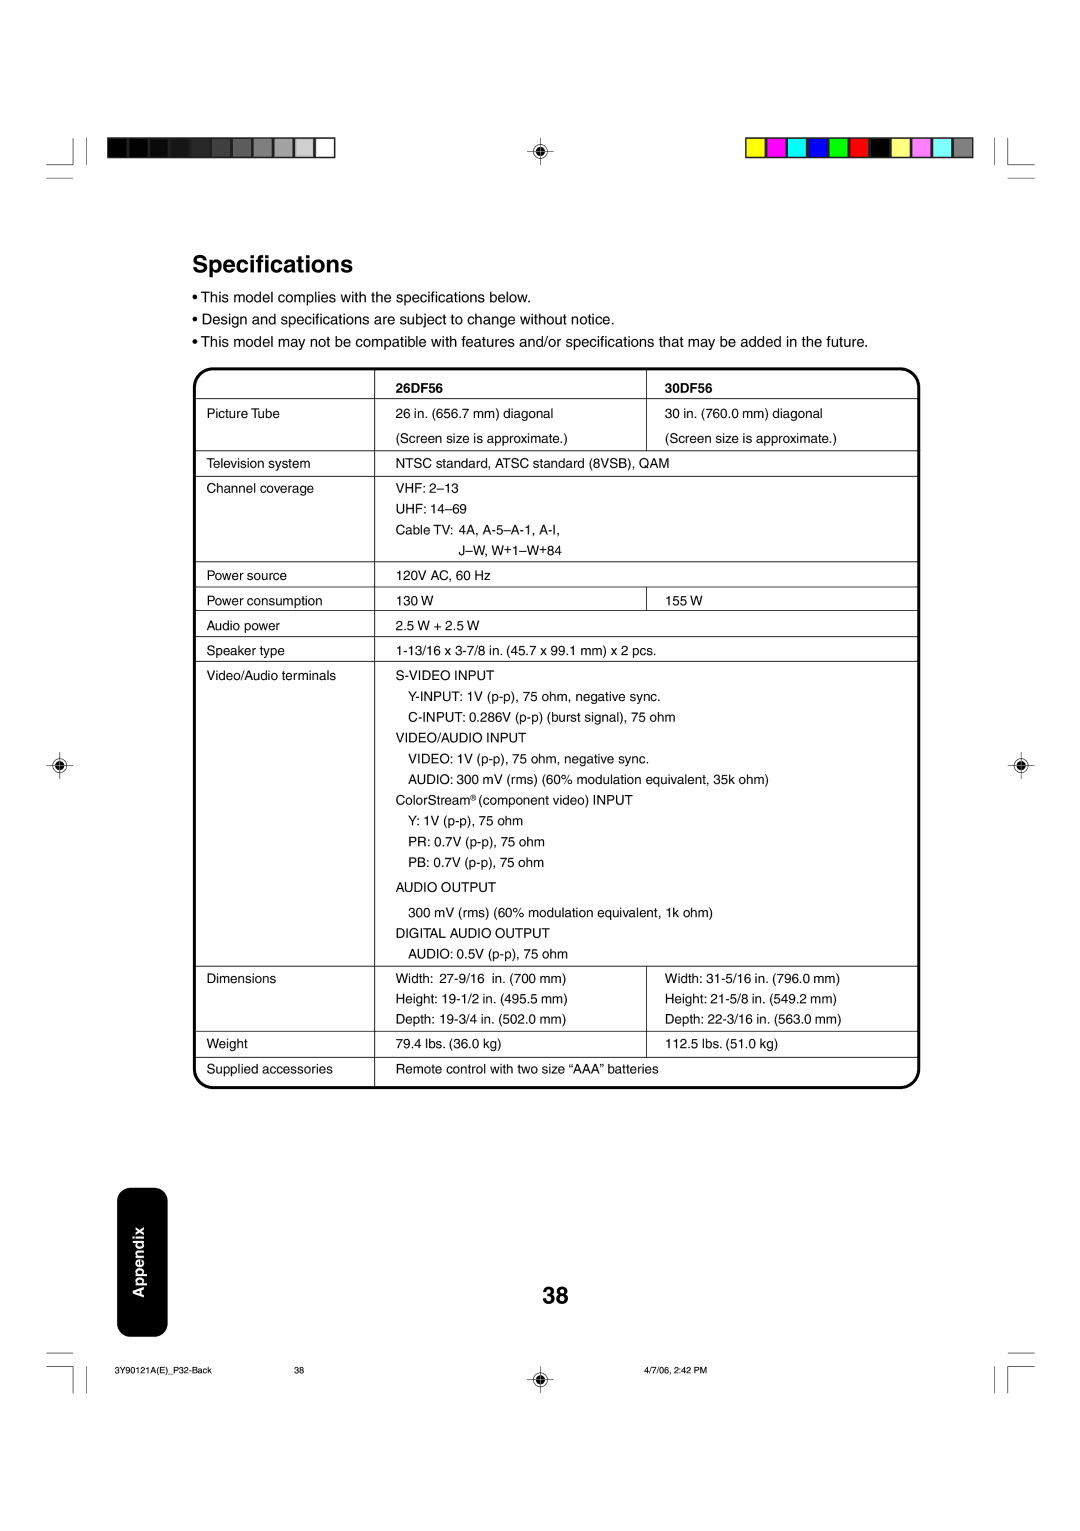 Toshiba appendix Specifications, 26DF56 30DF56 